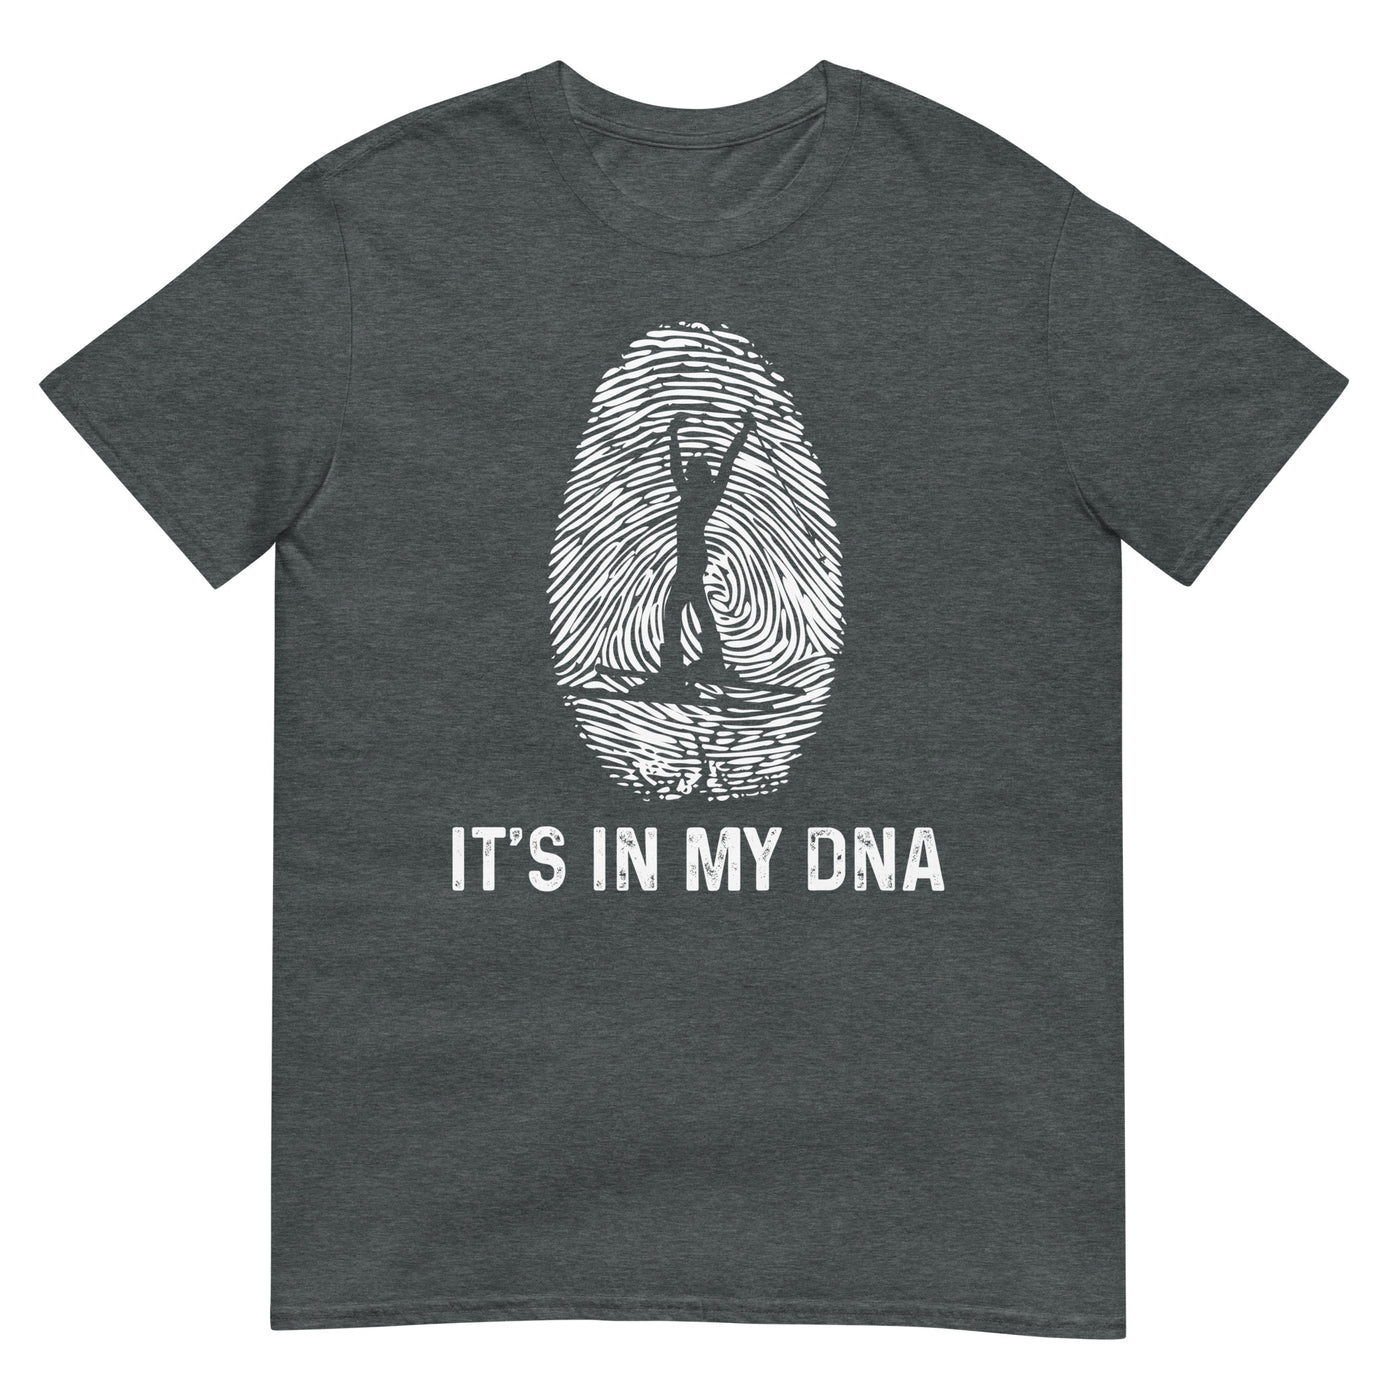 It's In My DNA 1 - T-Shirt (Unisex) klettern ski xxx yyy zzz Dark Heather